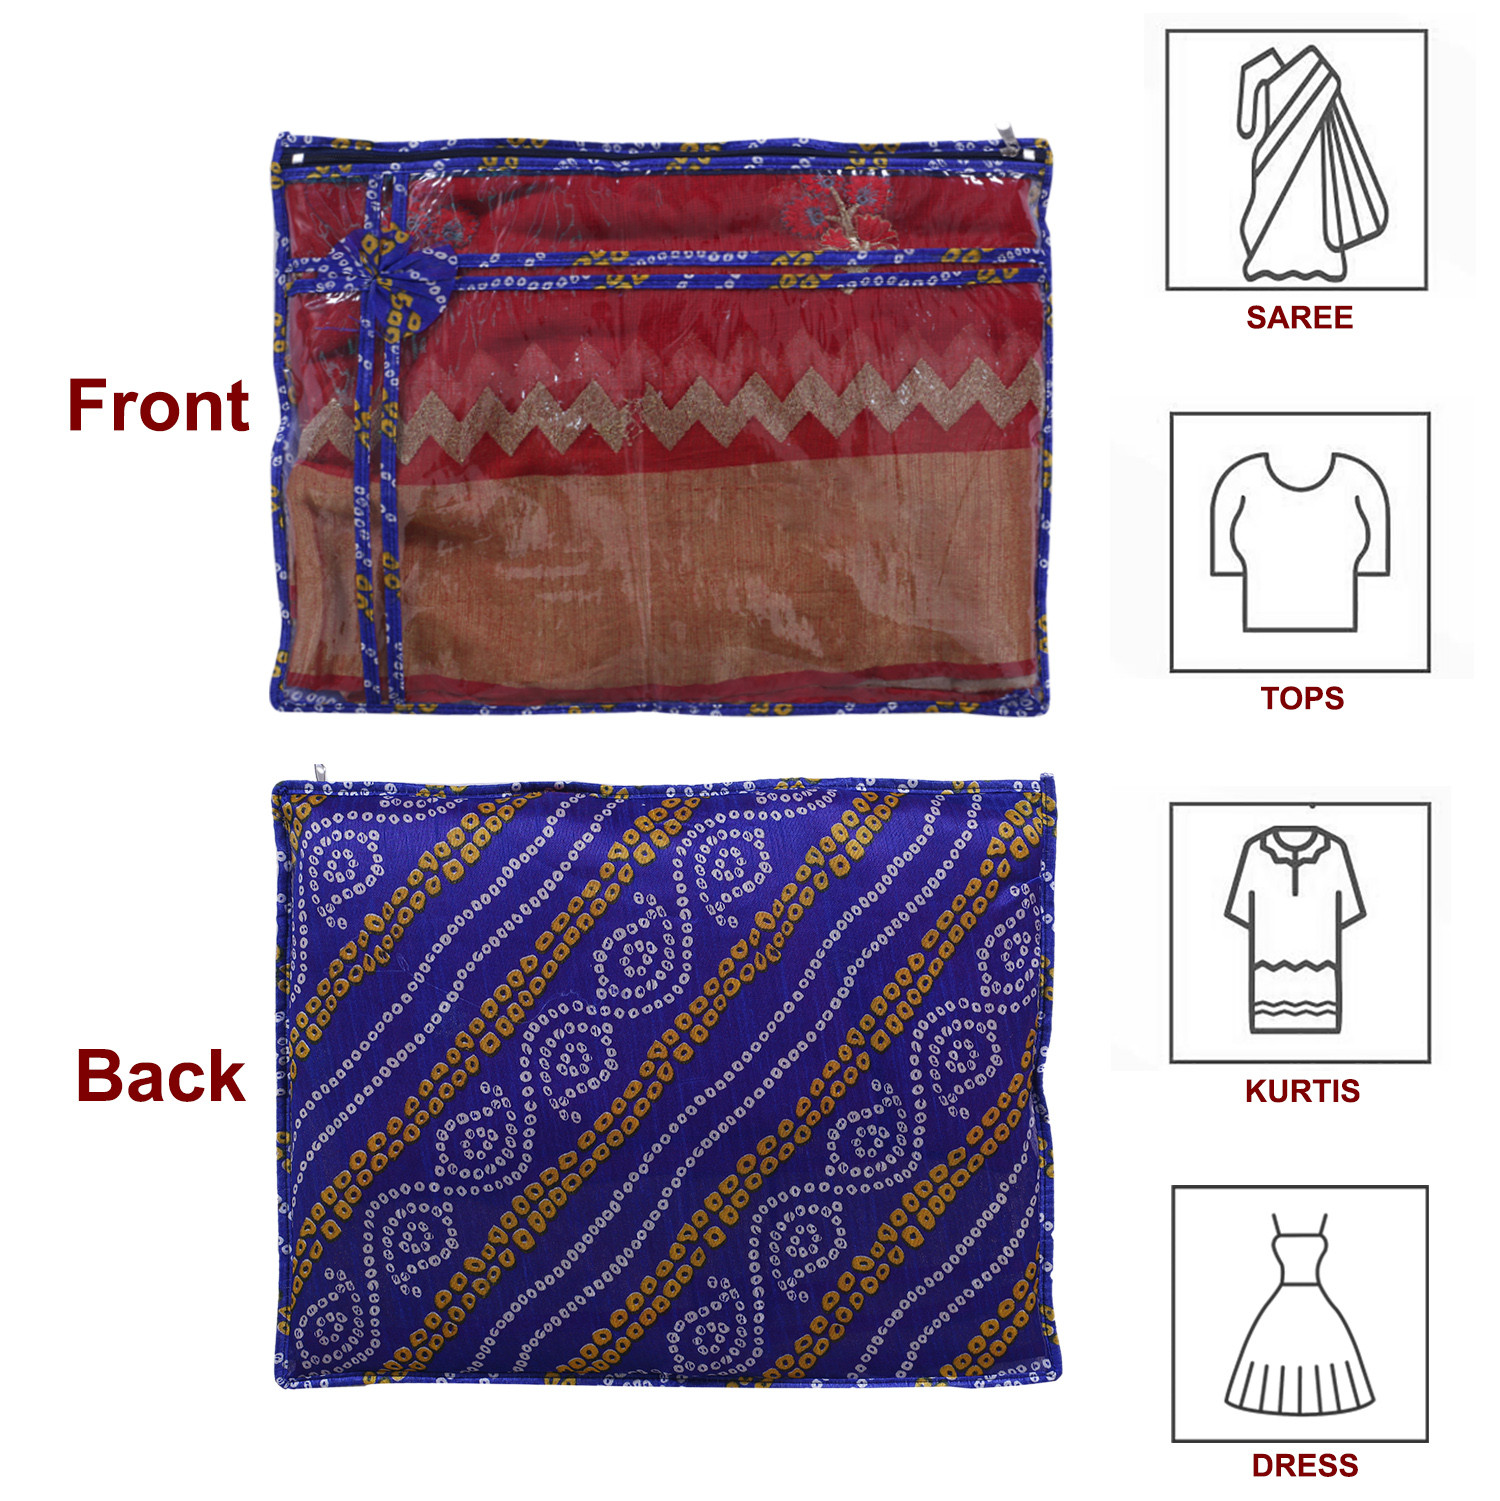 Kuber Industries Bandhani Print PVC Foldable Single Saree Cover|Clothes Storage For Saree, Lehenga, Suit With Transparent(Blue)